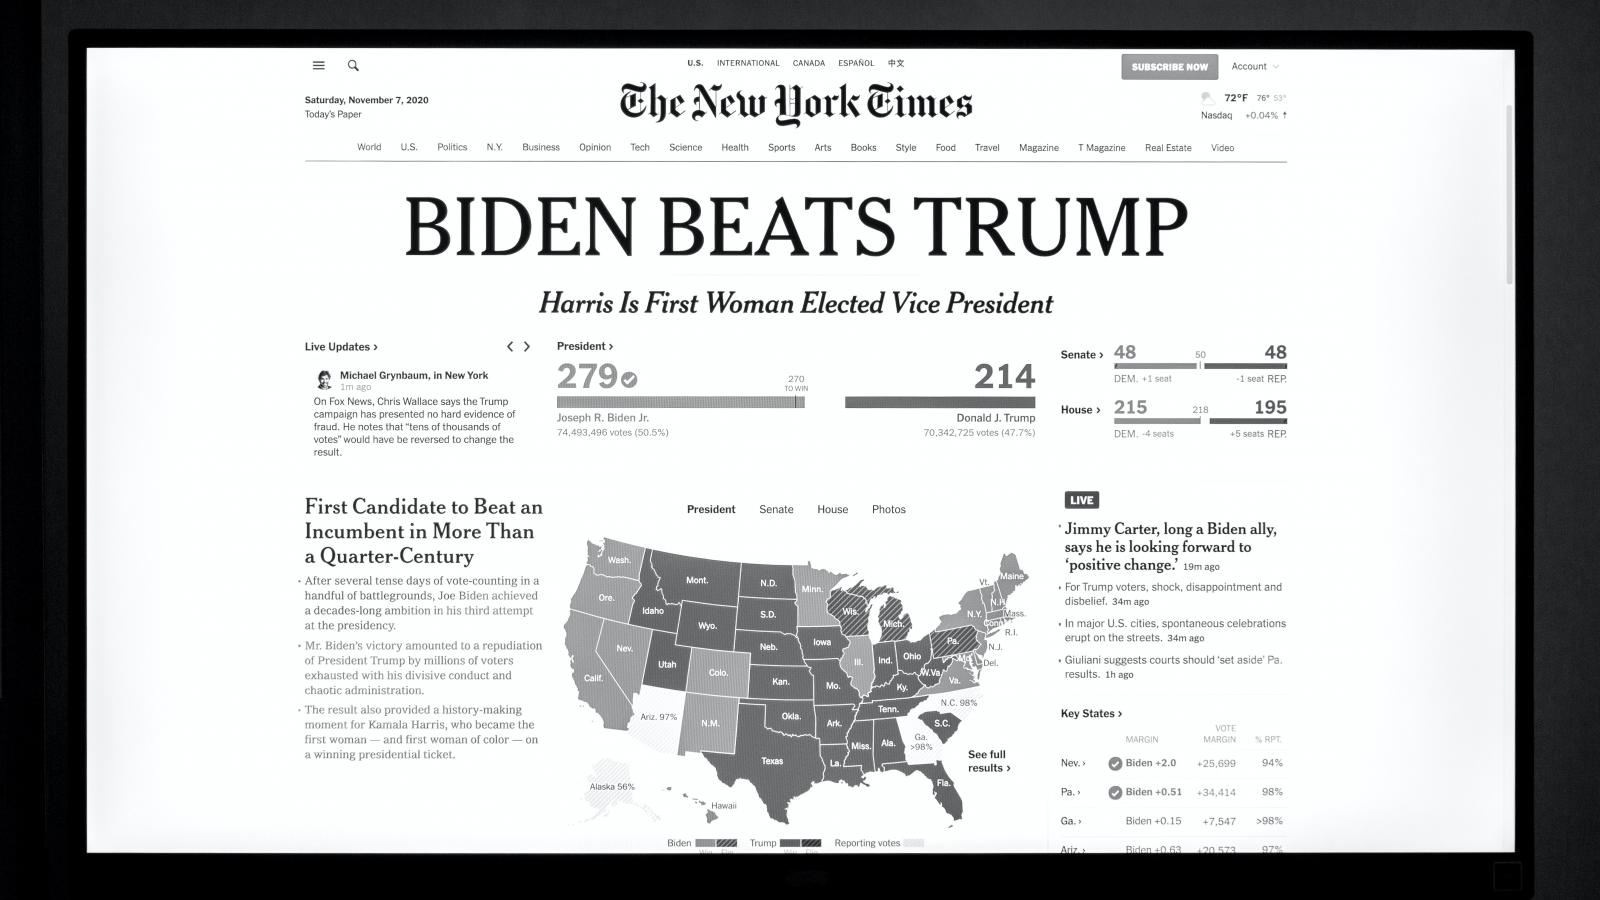 News article that says “Biden Beats Trump” 